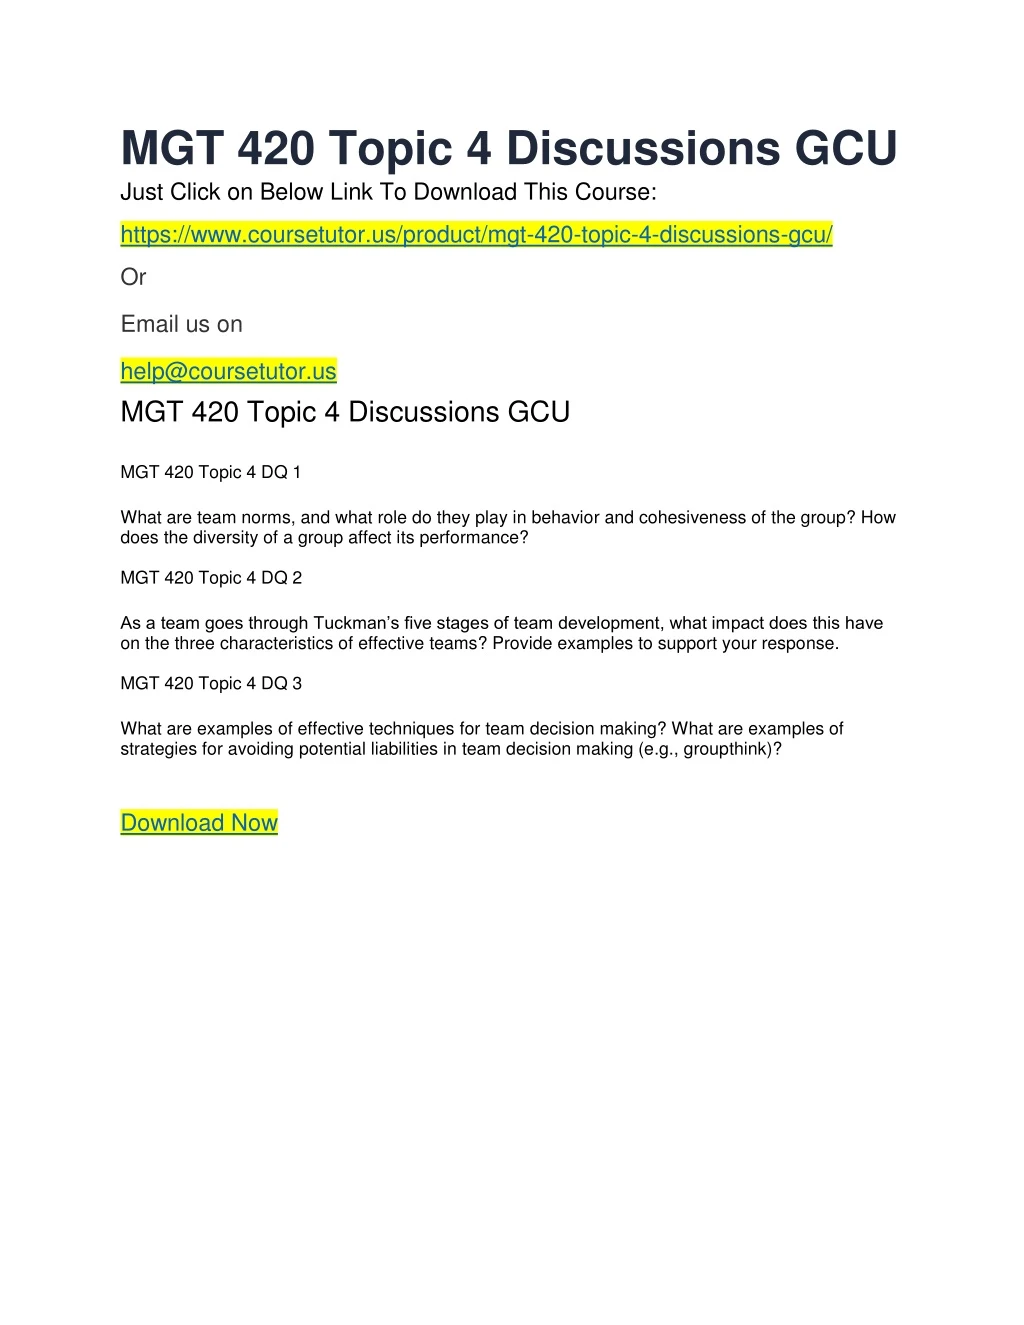 mgt 420 topic 4 discussions gcu just click